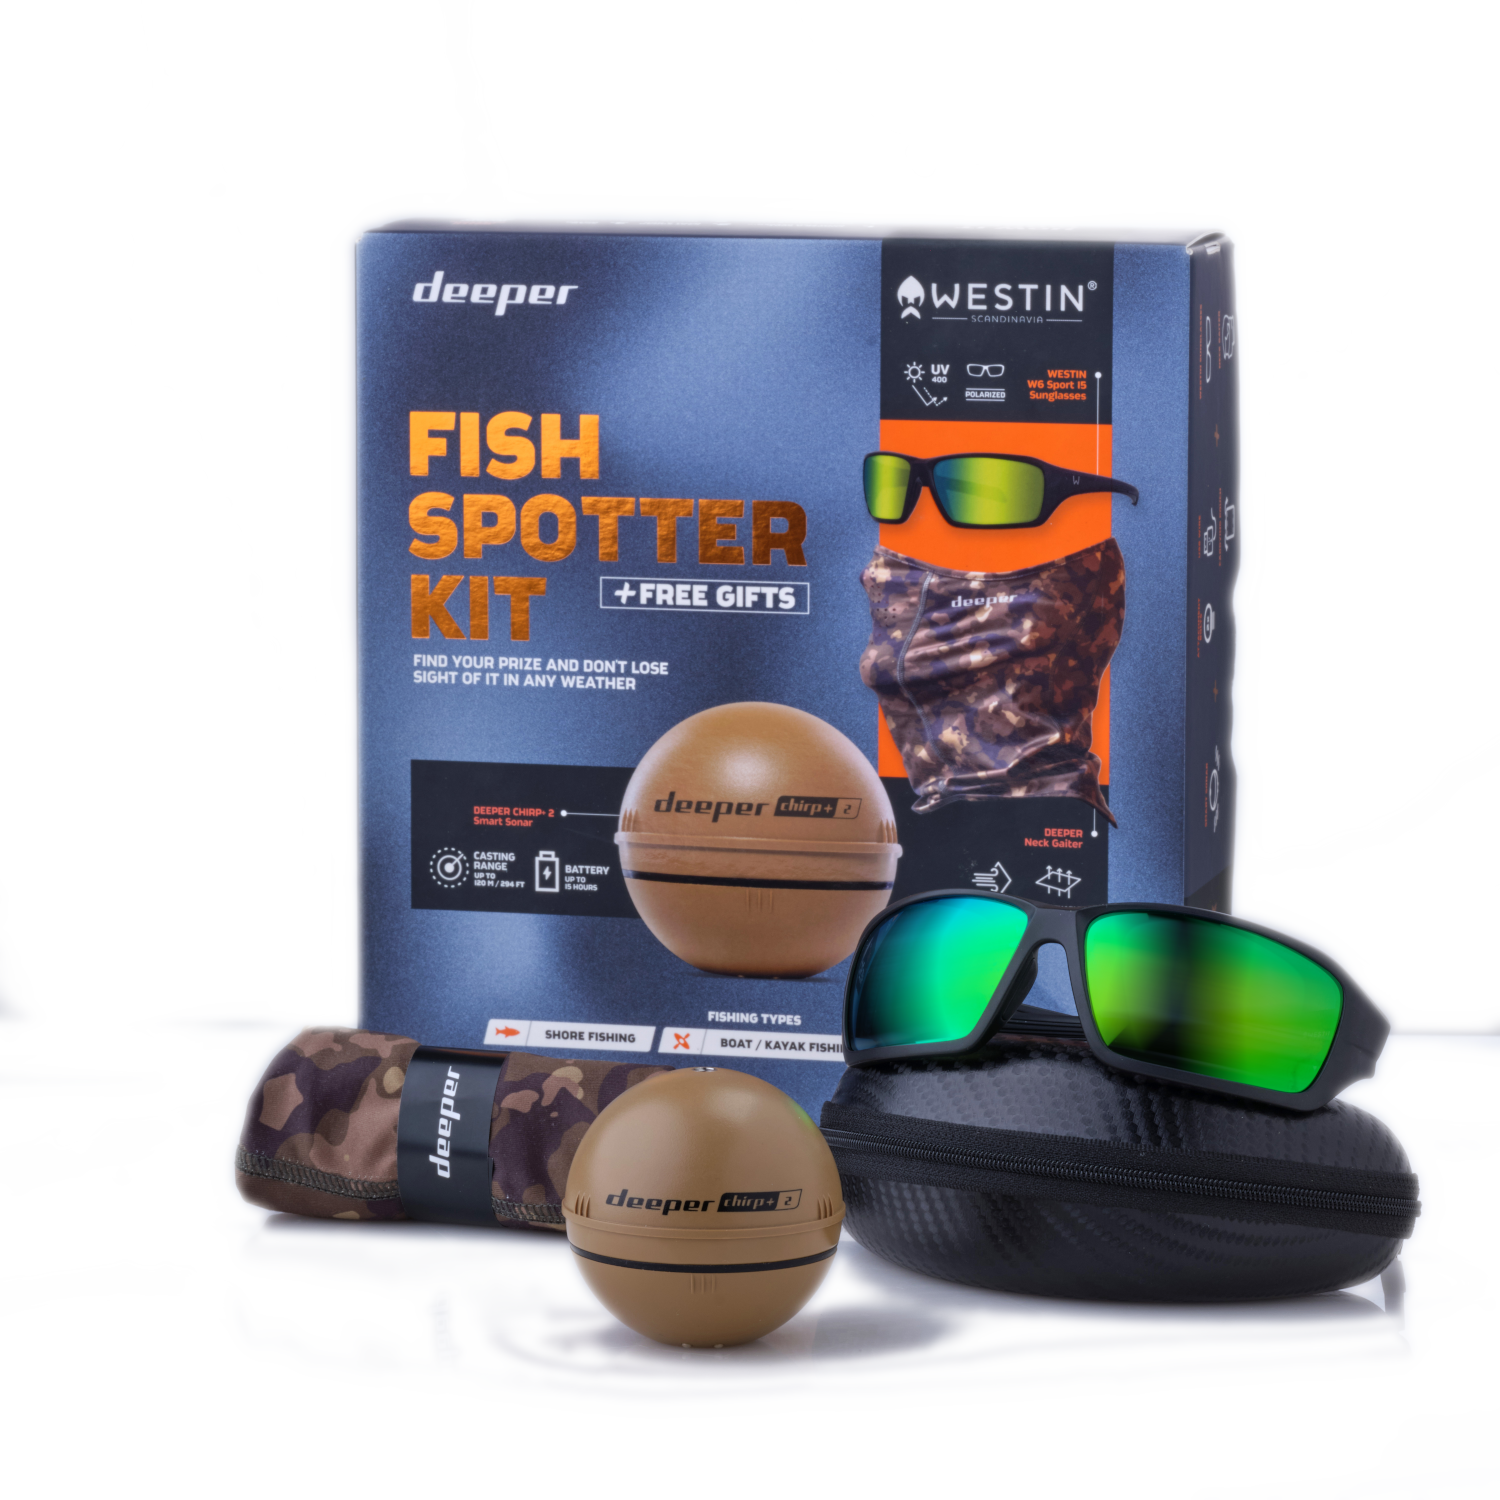 Deeper Smart Sonar Chirp+ 2 Fish Spotter Kit Westin - LMT